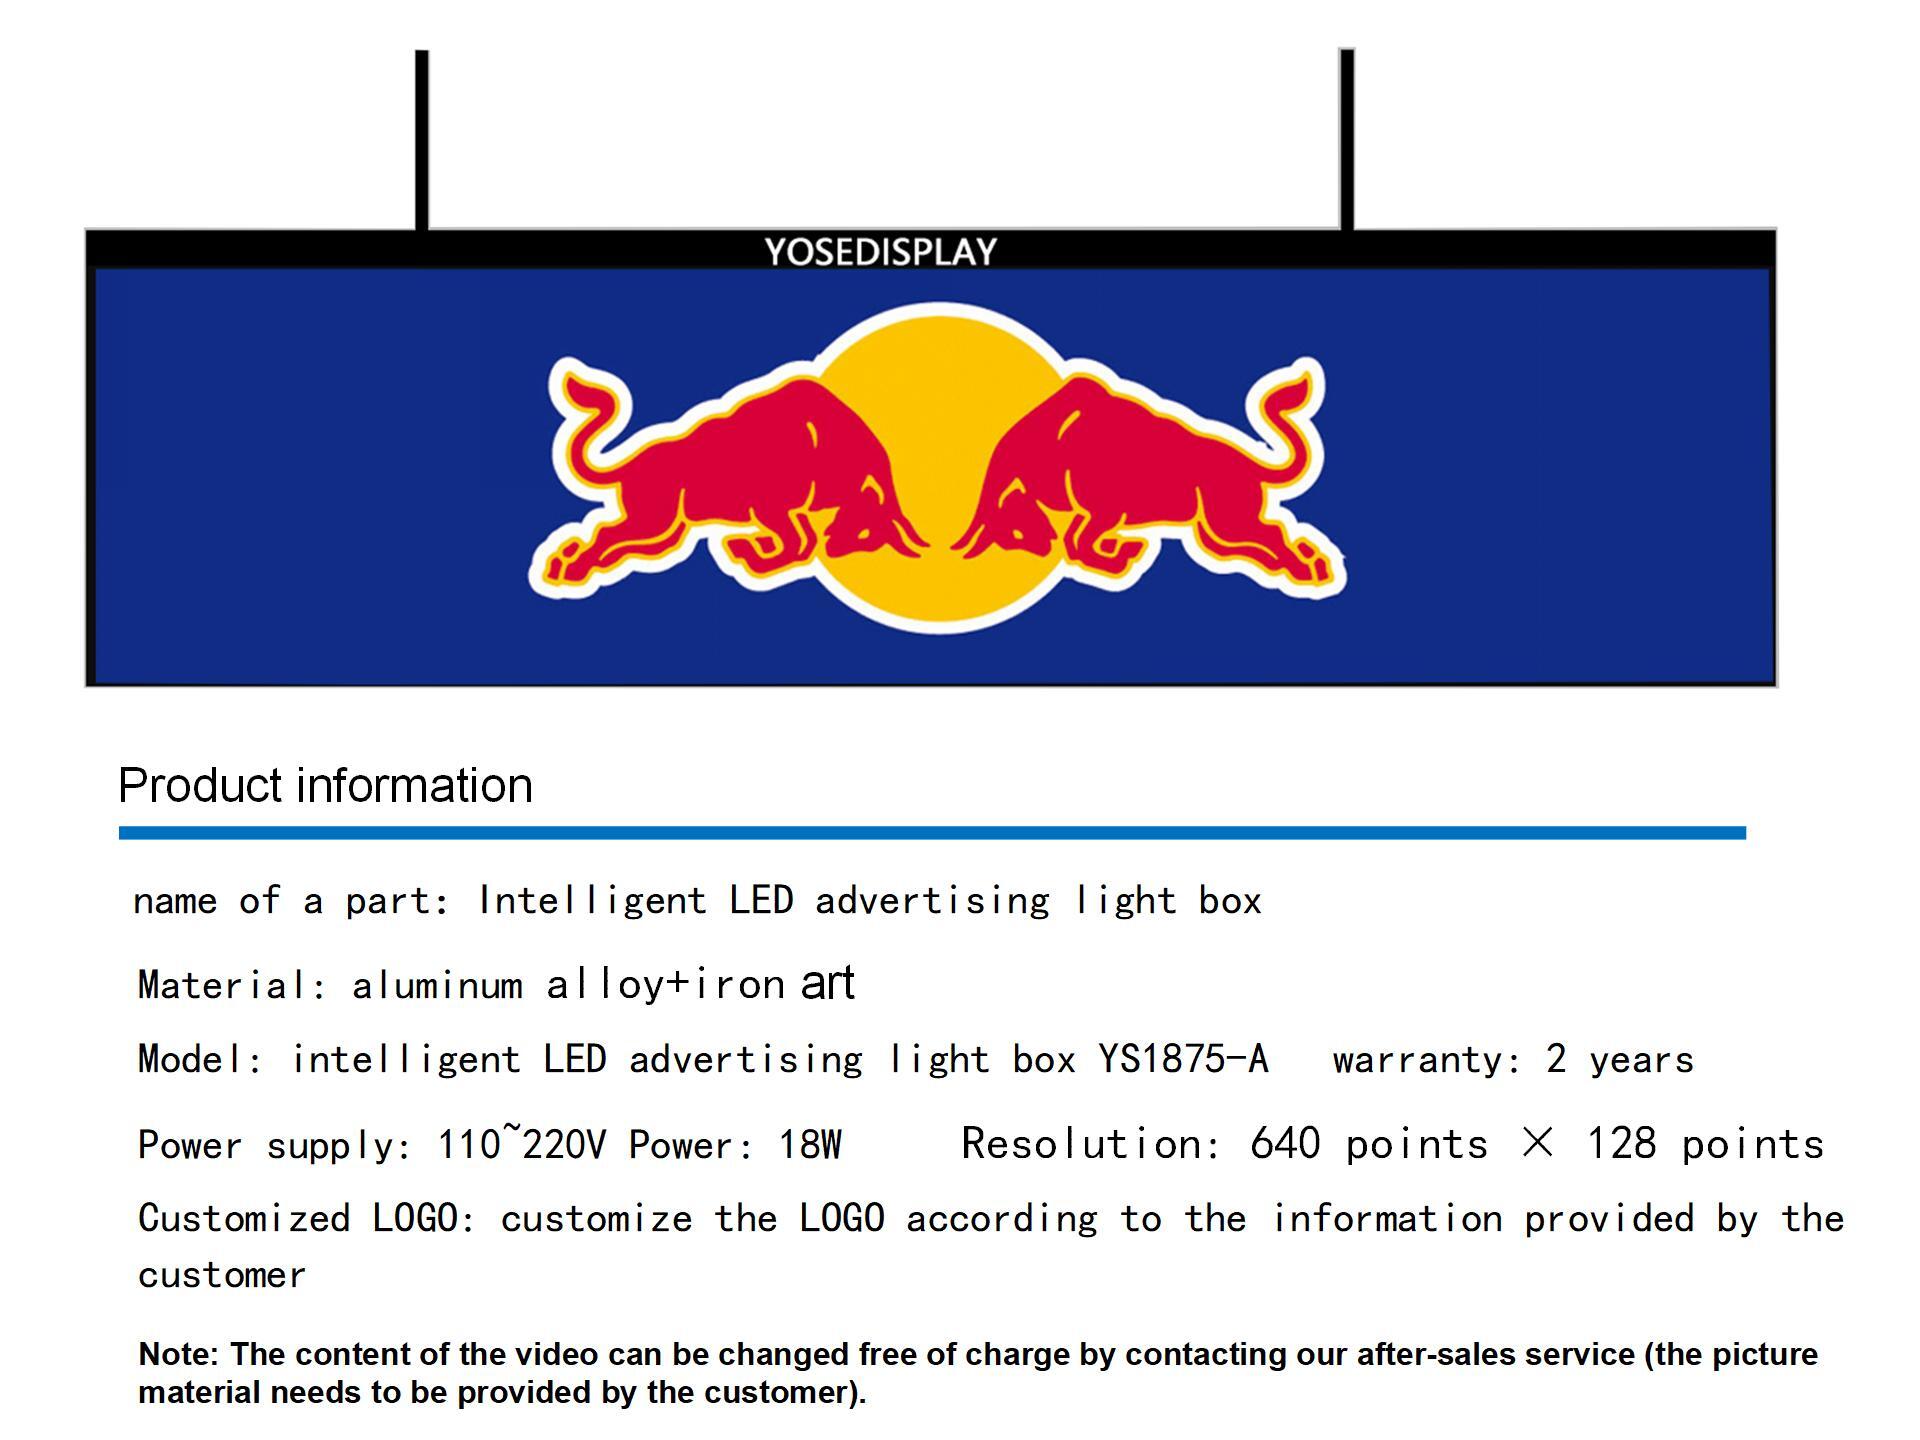 Intelligent LED advertising light box